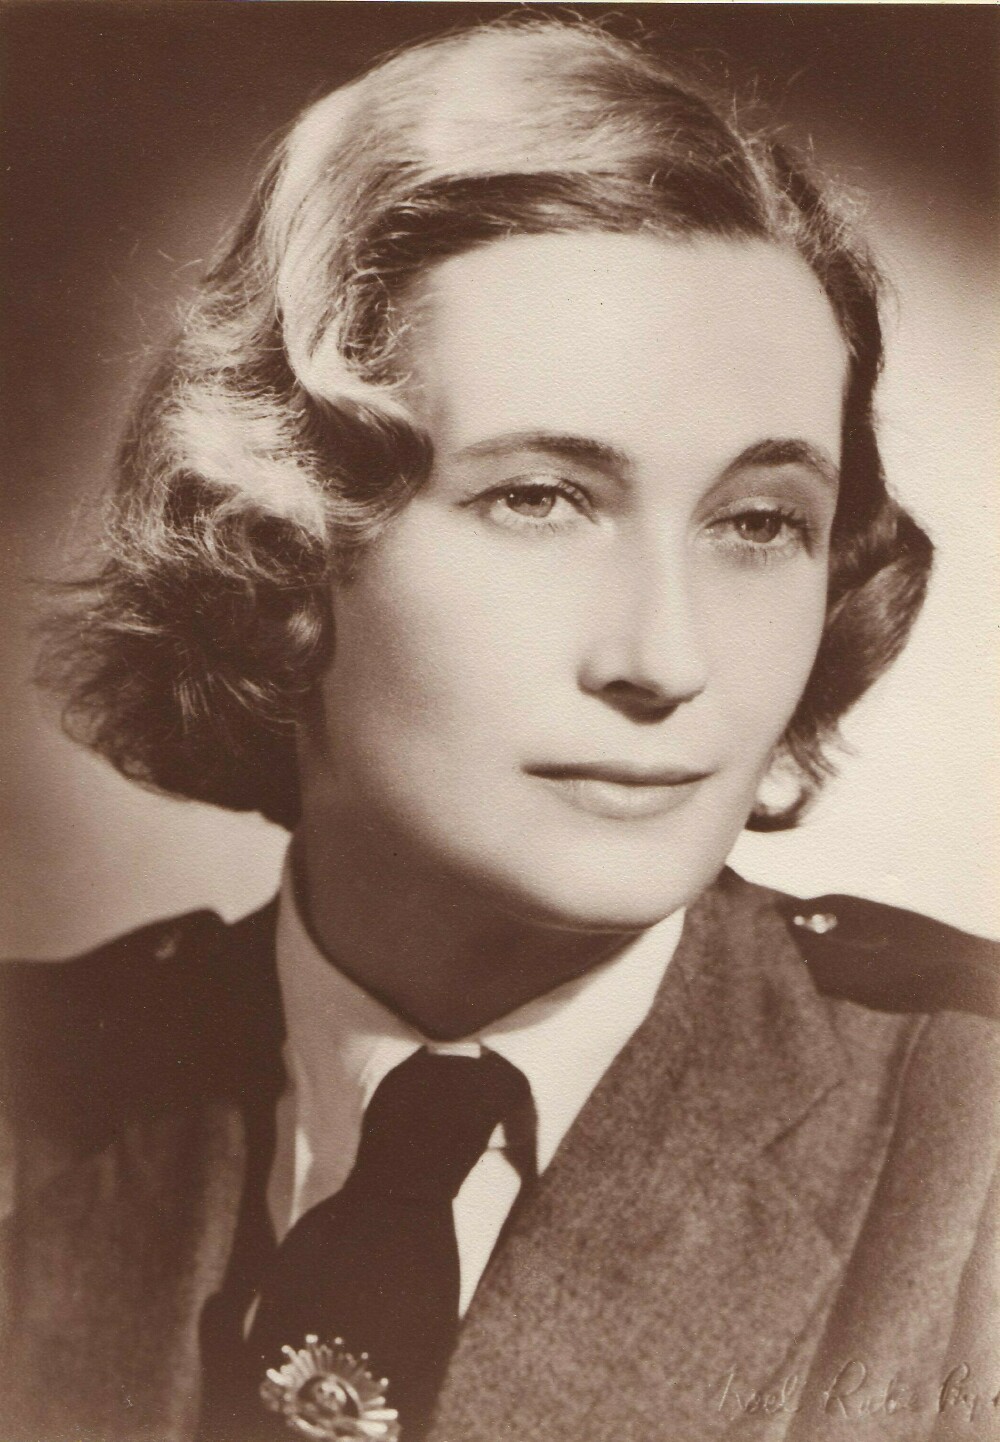 Lt. Beatrice L. Krauss